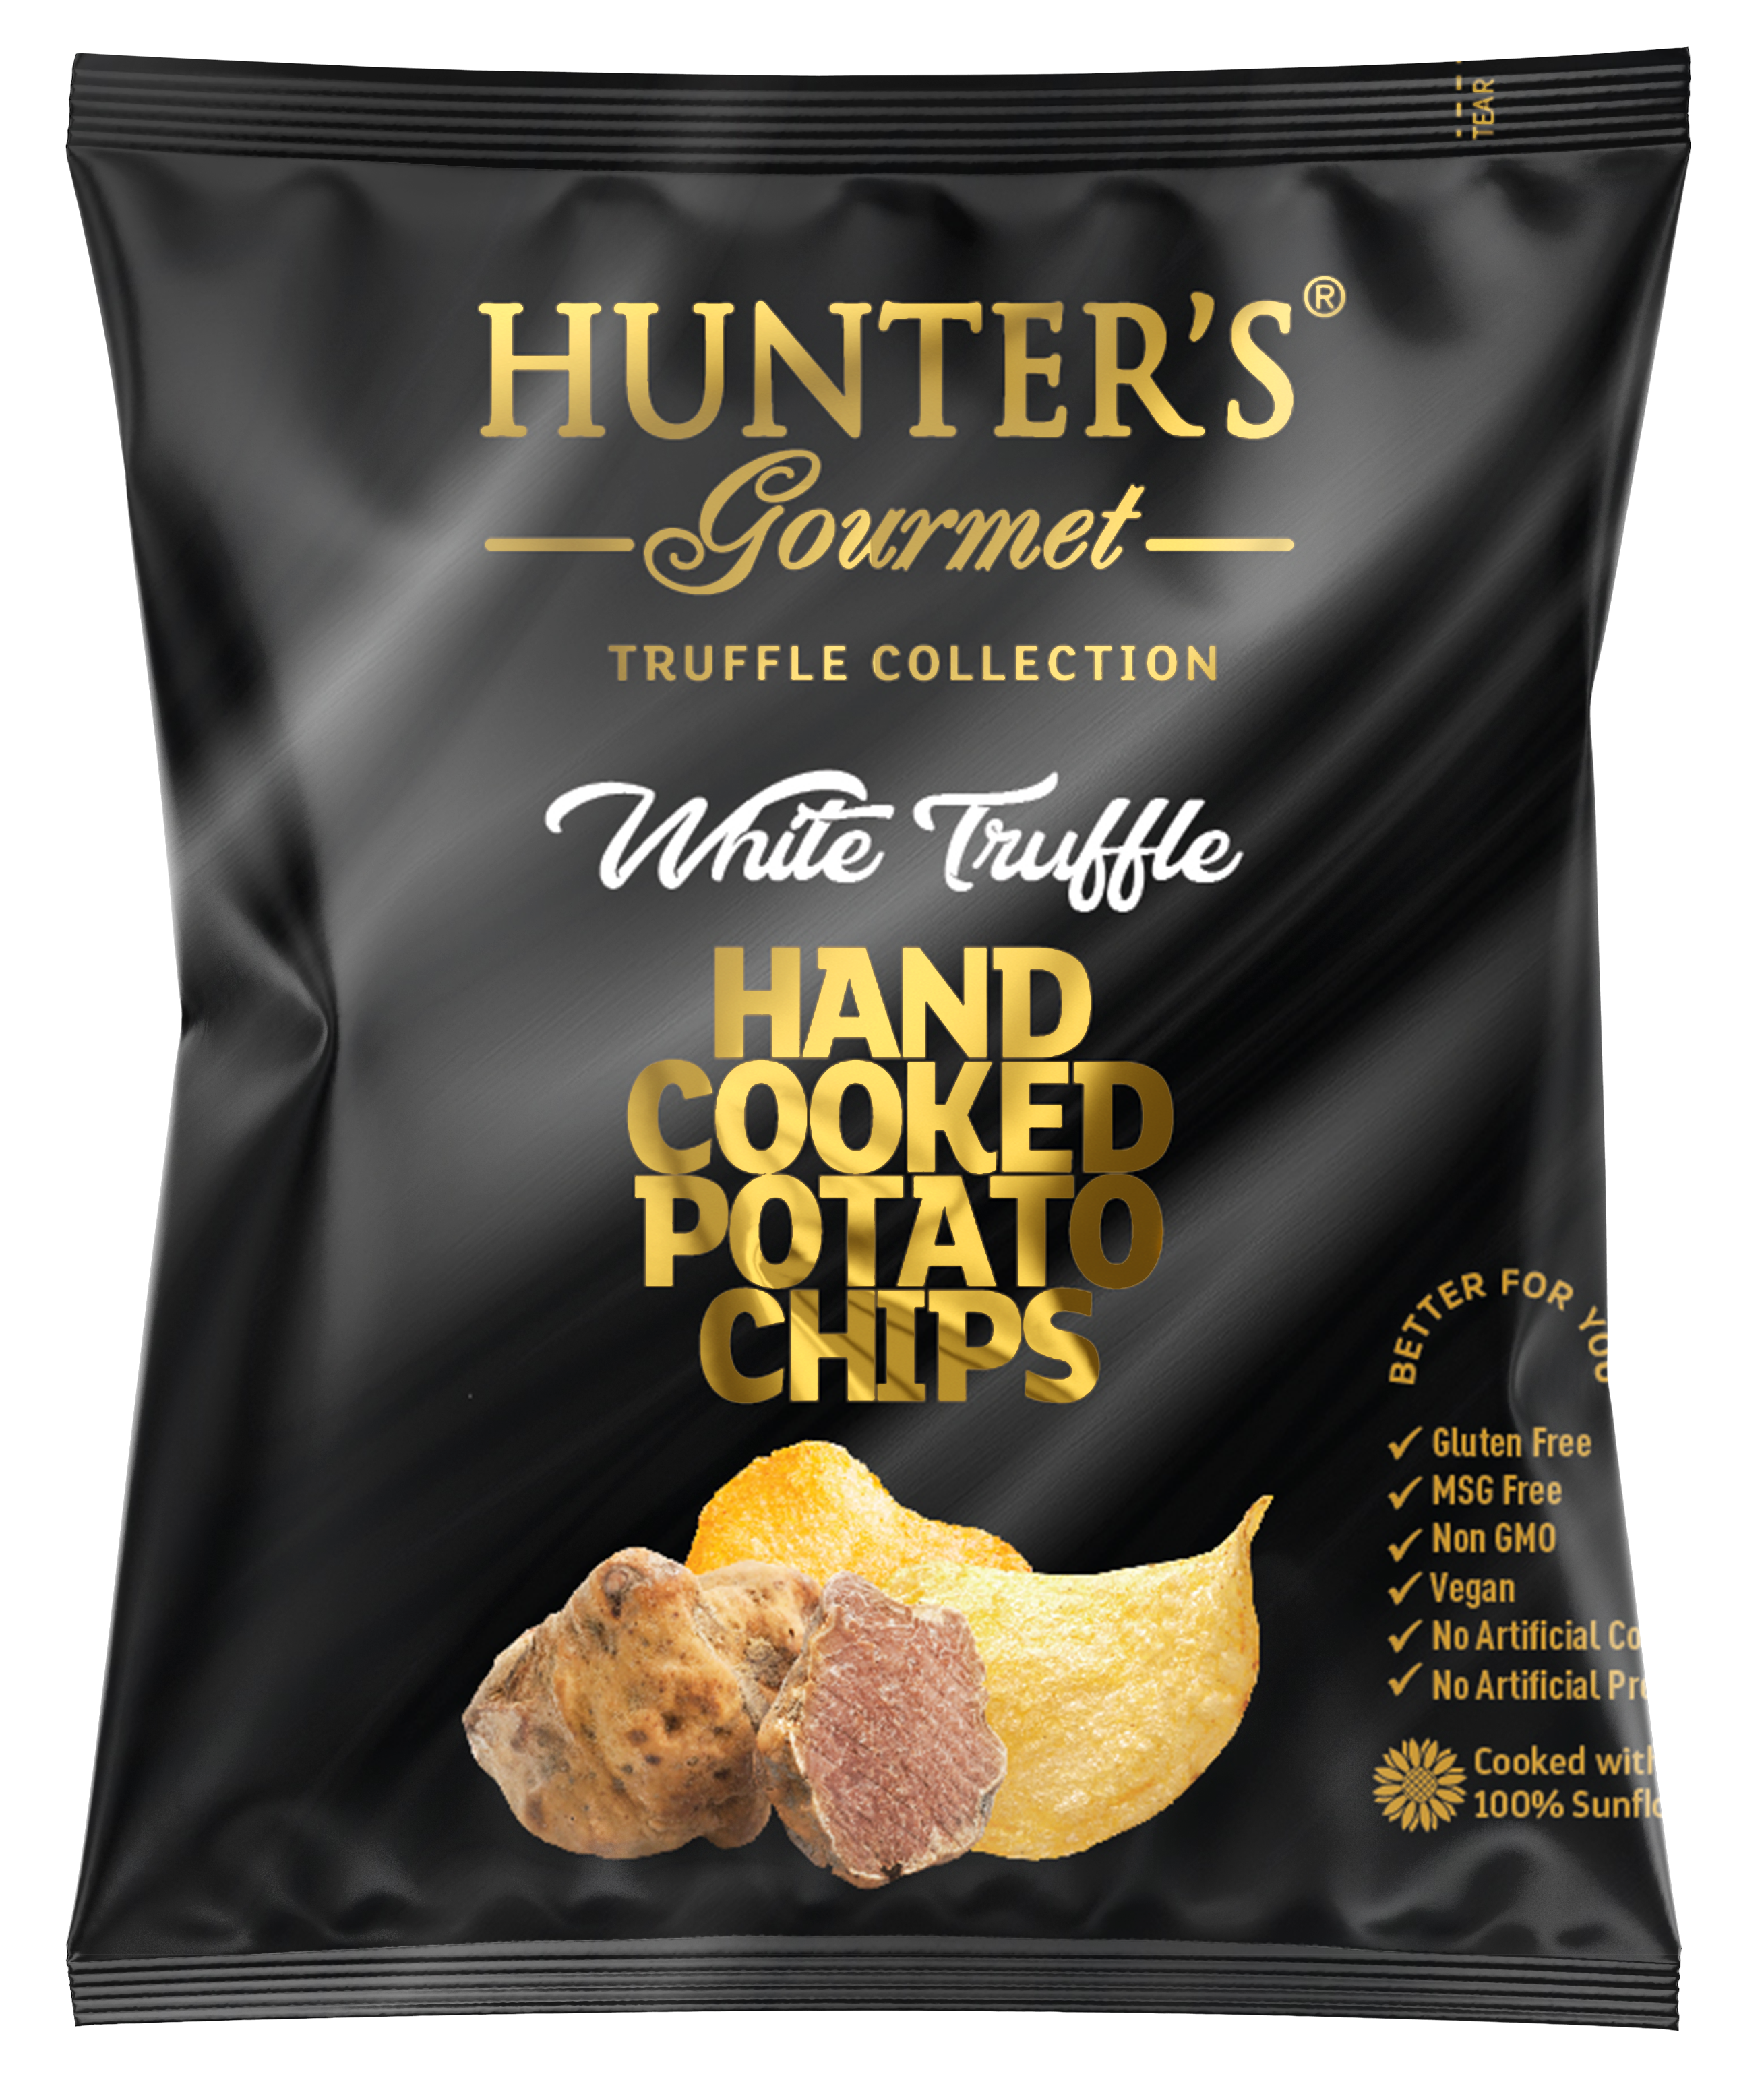 Hunter's Gourmet Hand Cooked Potato Chips White Truffle 50 units per case 25 g